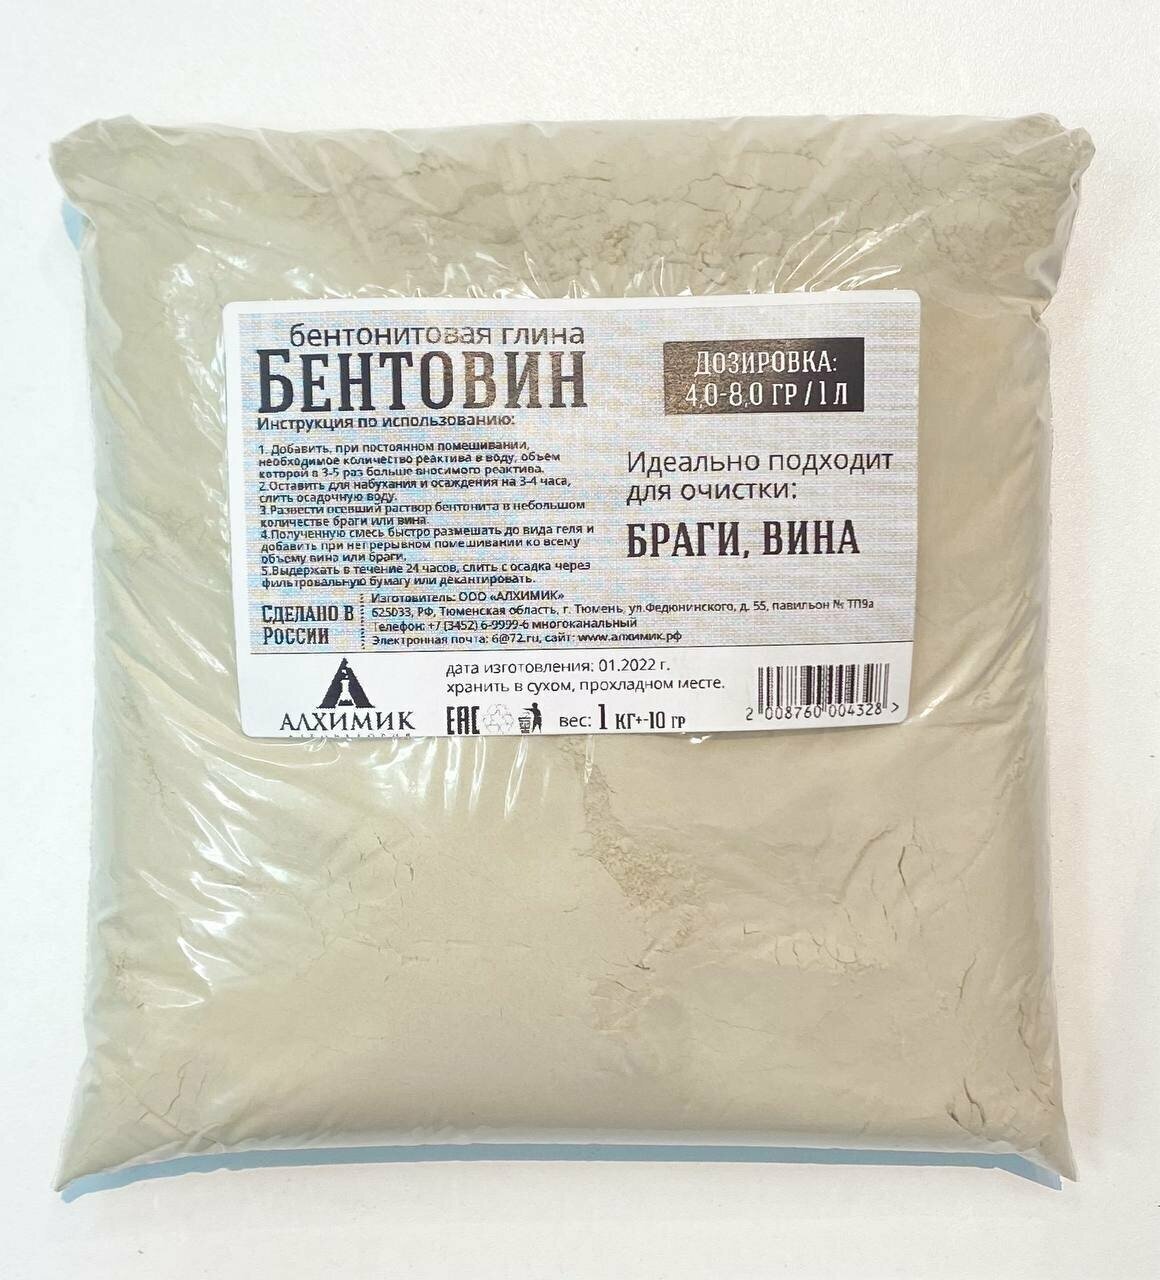 Бентонит "бентовин" для осветления вина и браги, 1 кг - 1 шт.